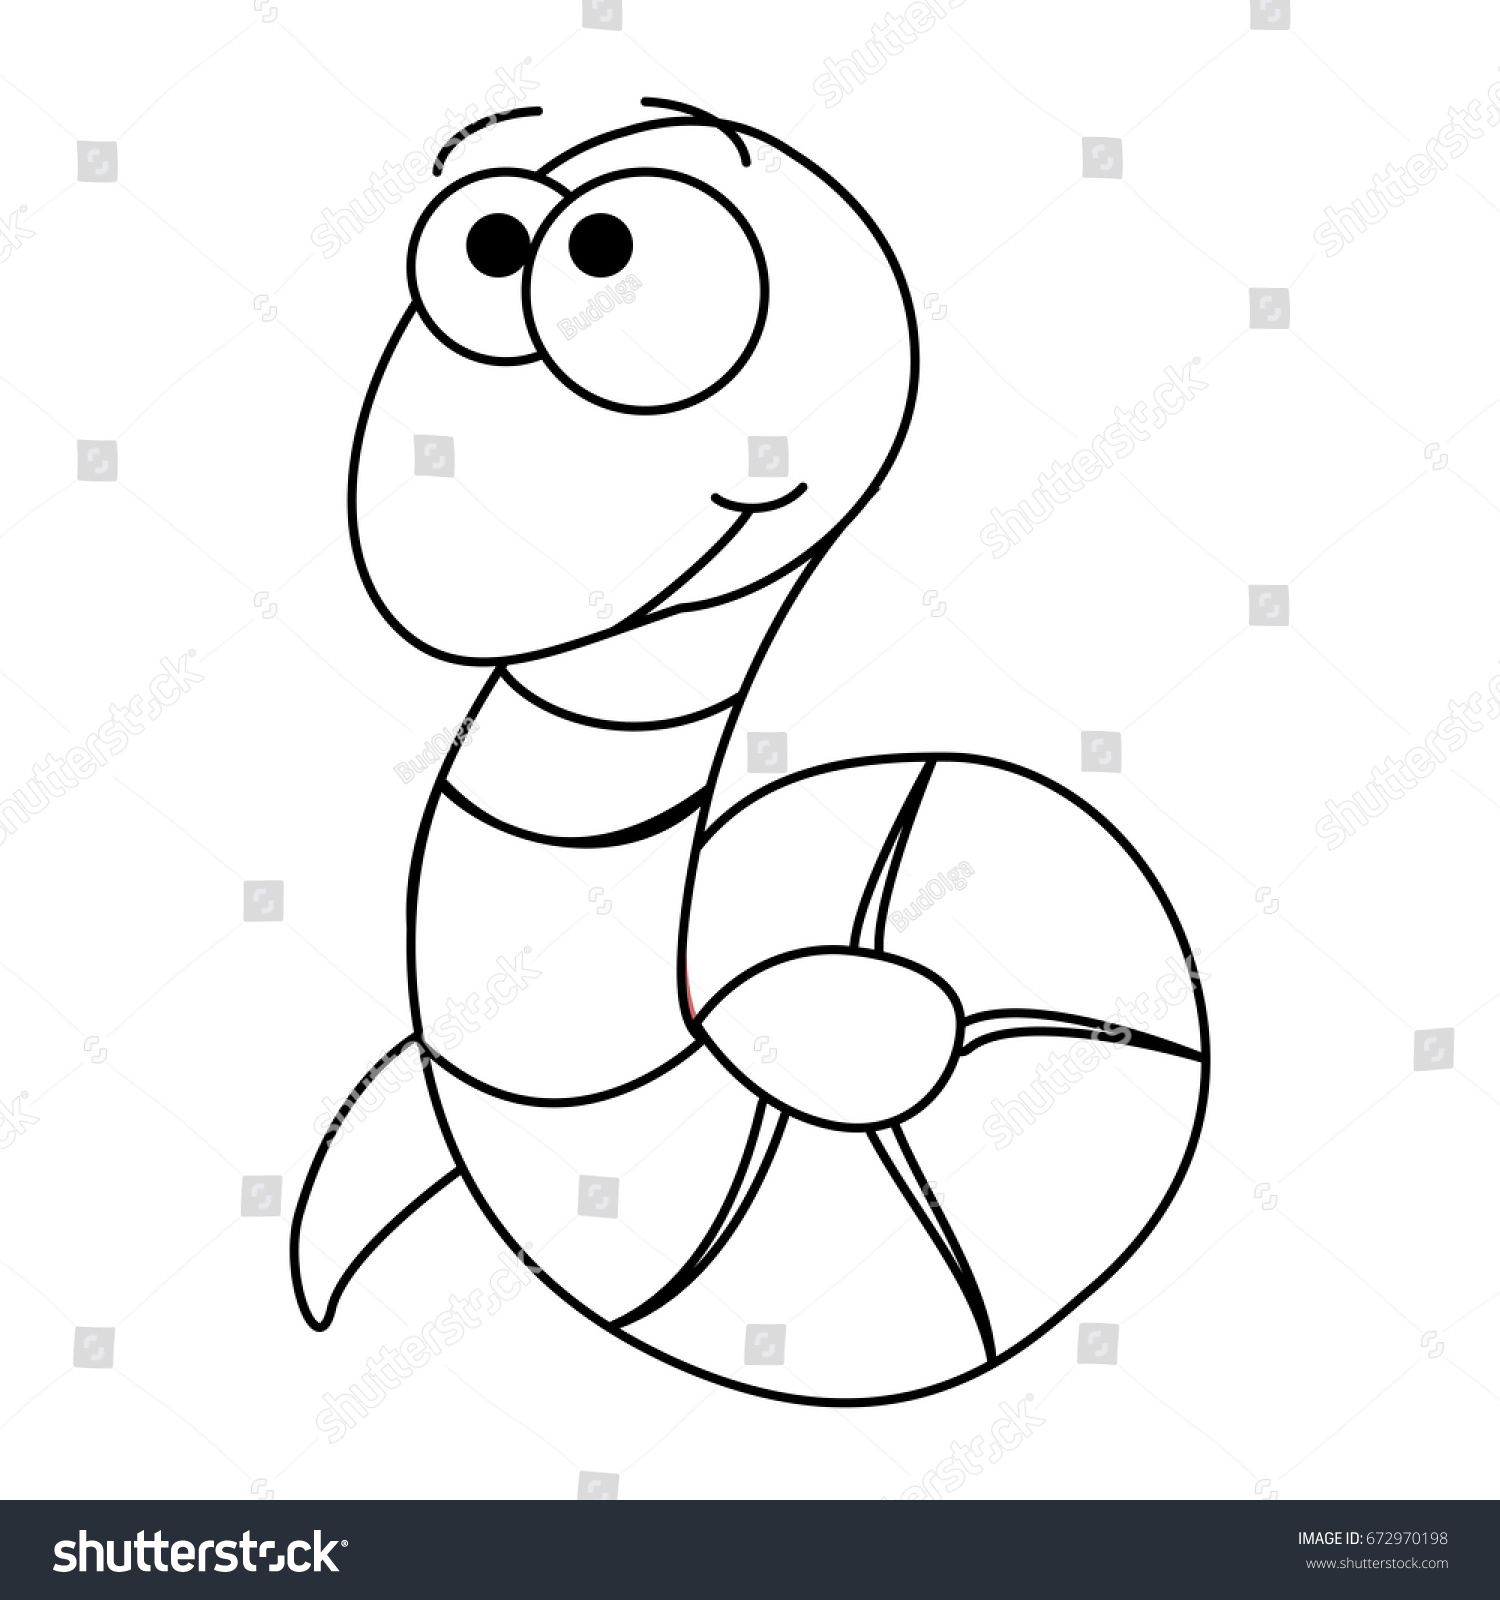 Colorless funny cartoon worm Vector illustration Coloring page Preschool education